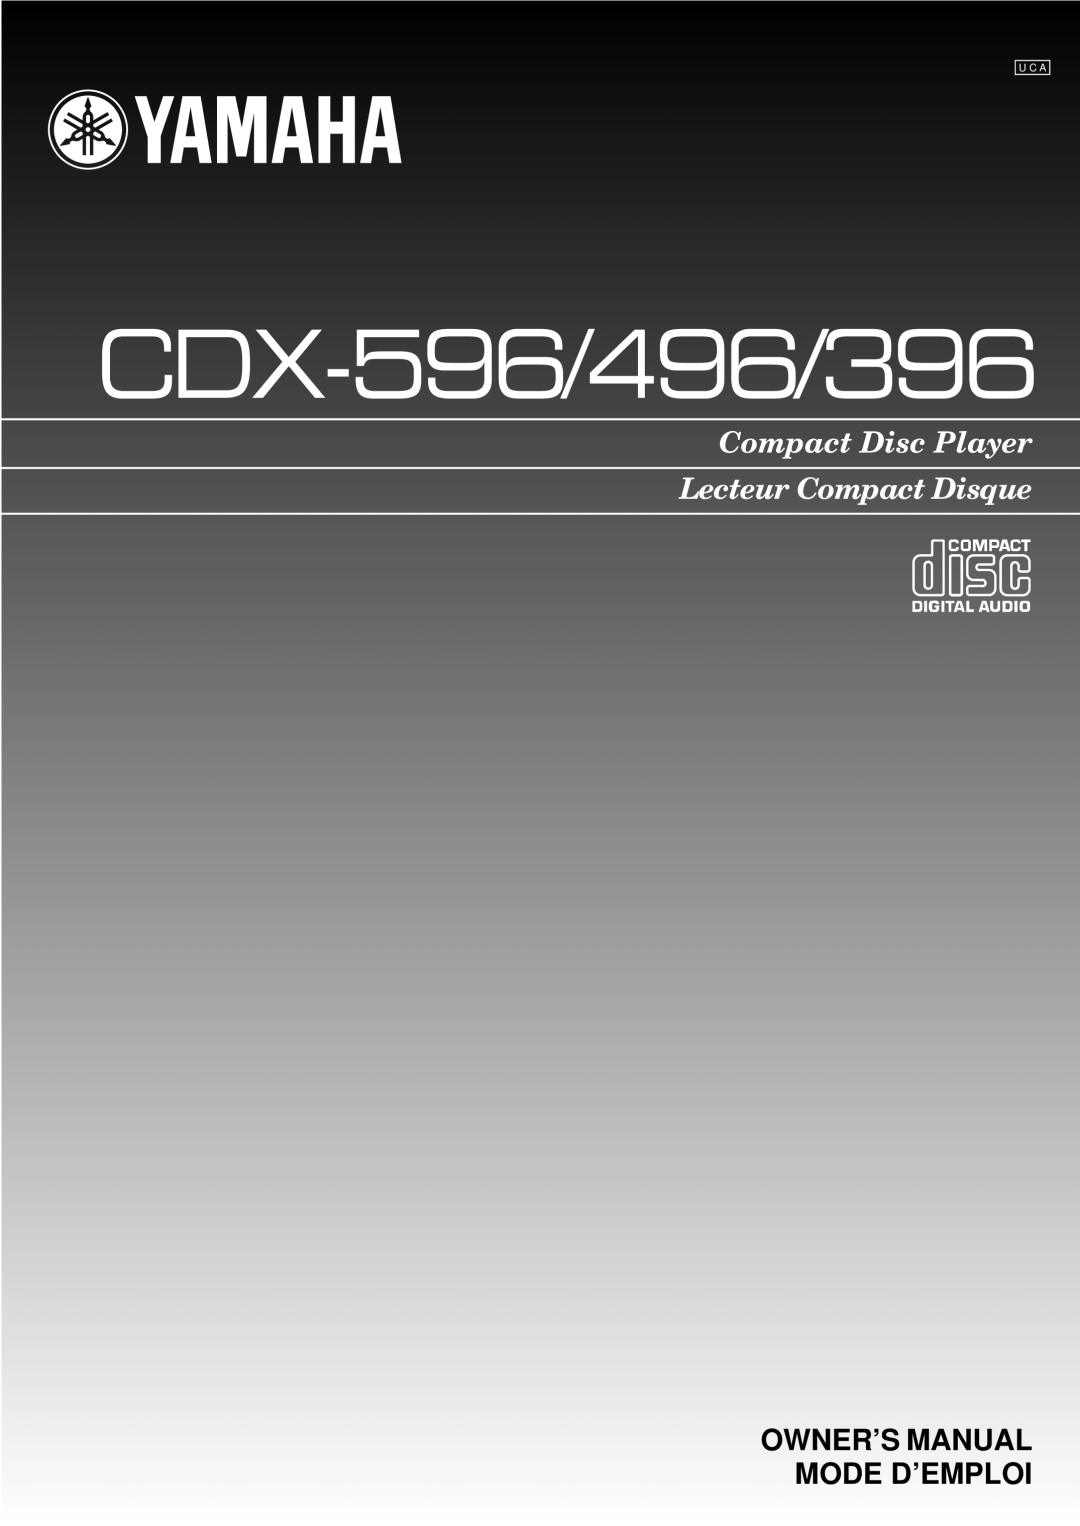 Yamaha CDX-496, CDX-396 owner manual CDX-596/496/396, Compact Disc Player Lecteur Compact Disque, U C A 